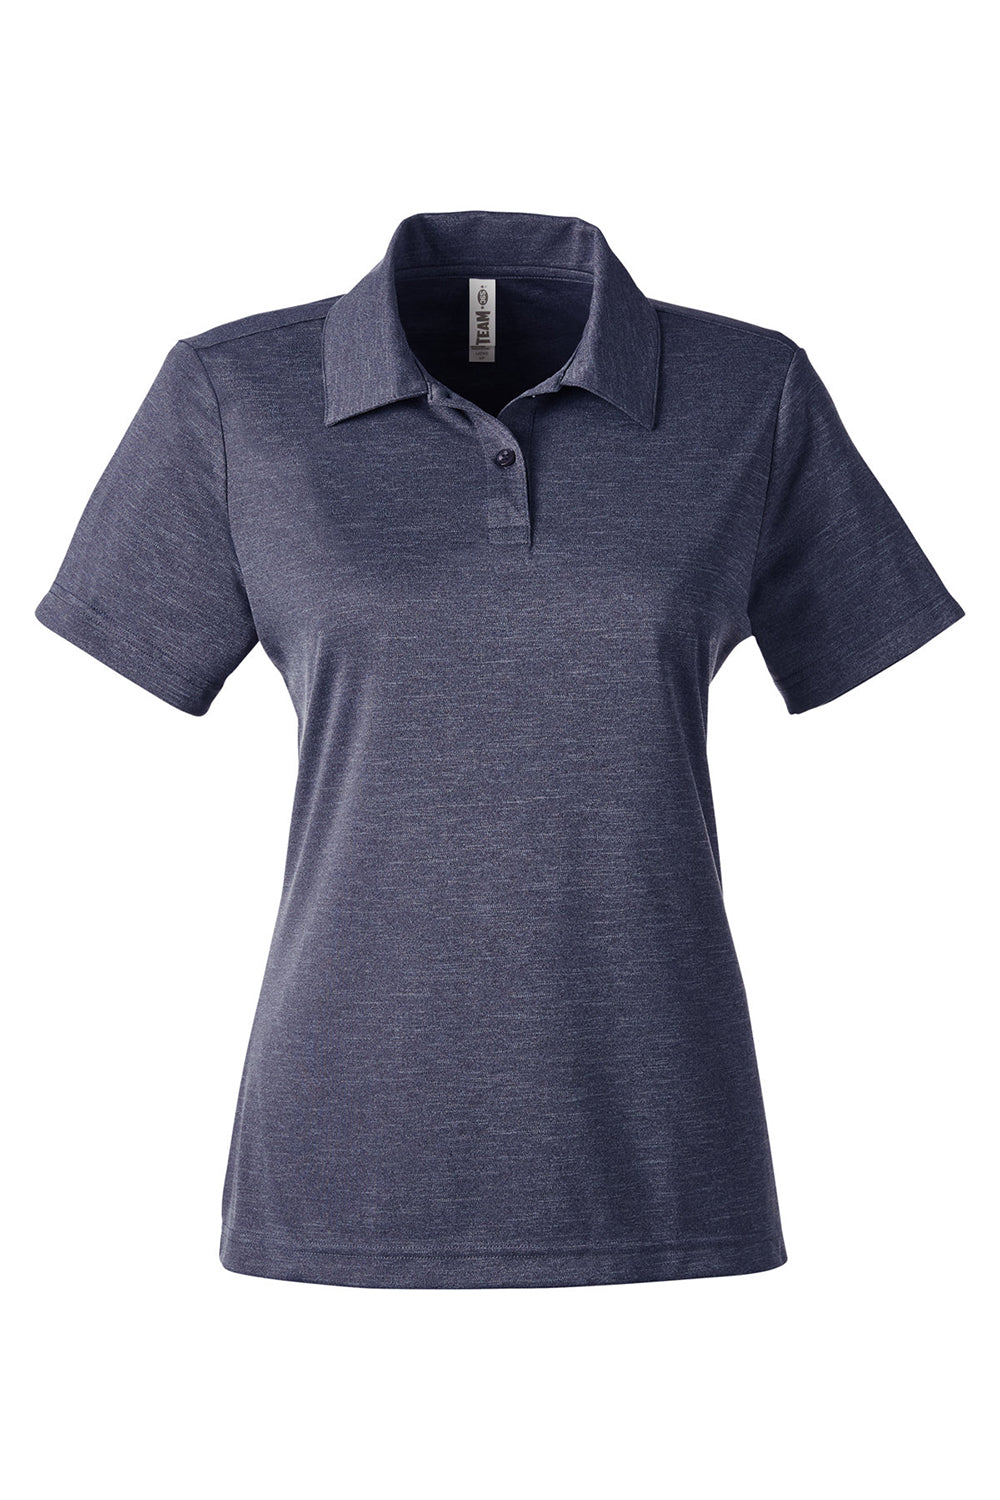 Team 365 TT51HW Womens Zone Sonic Moisture Wicking Short Sleeve Polo Shirt Heather Dark Navy Blue Flat Front